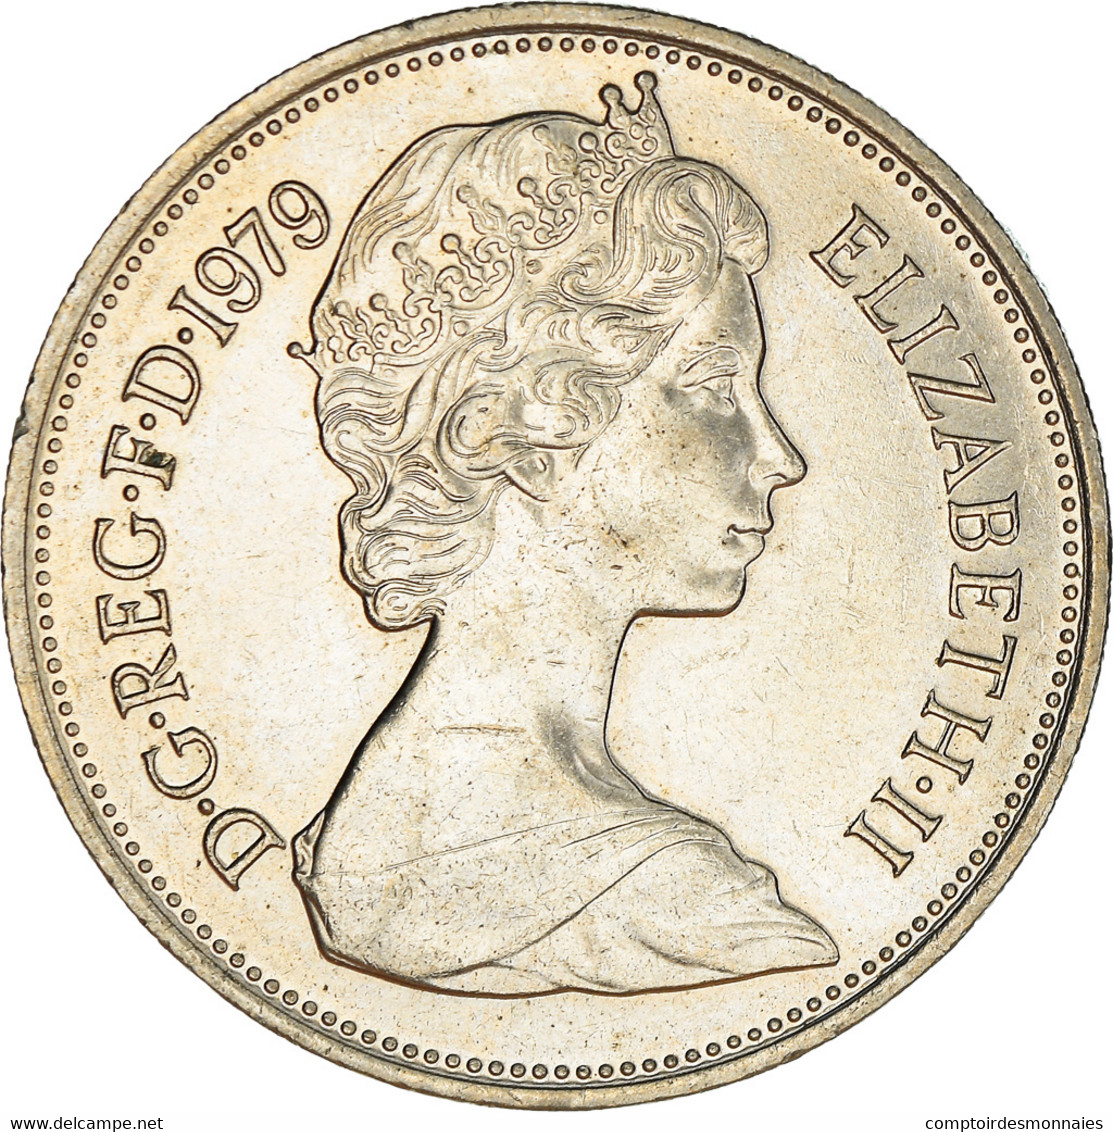 Monnaie, Grande-Bretagne, Elizabeth II, 10 New Pence, 1979, TTB+, Cupro-nickel - 10 Pence & 10 New Pence